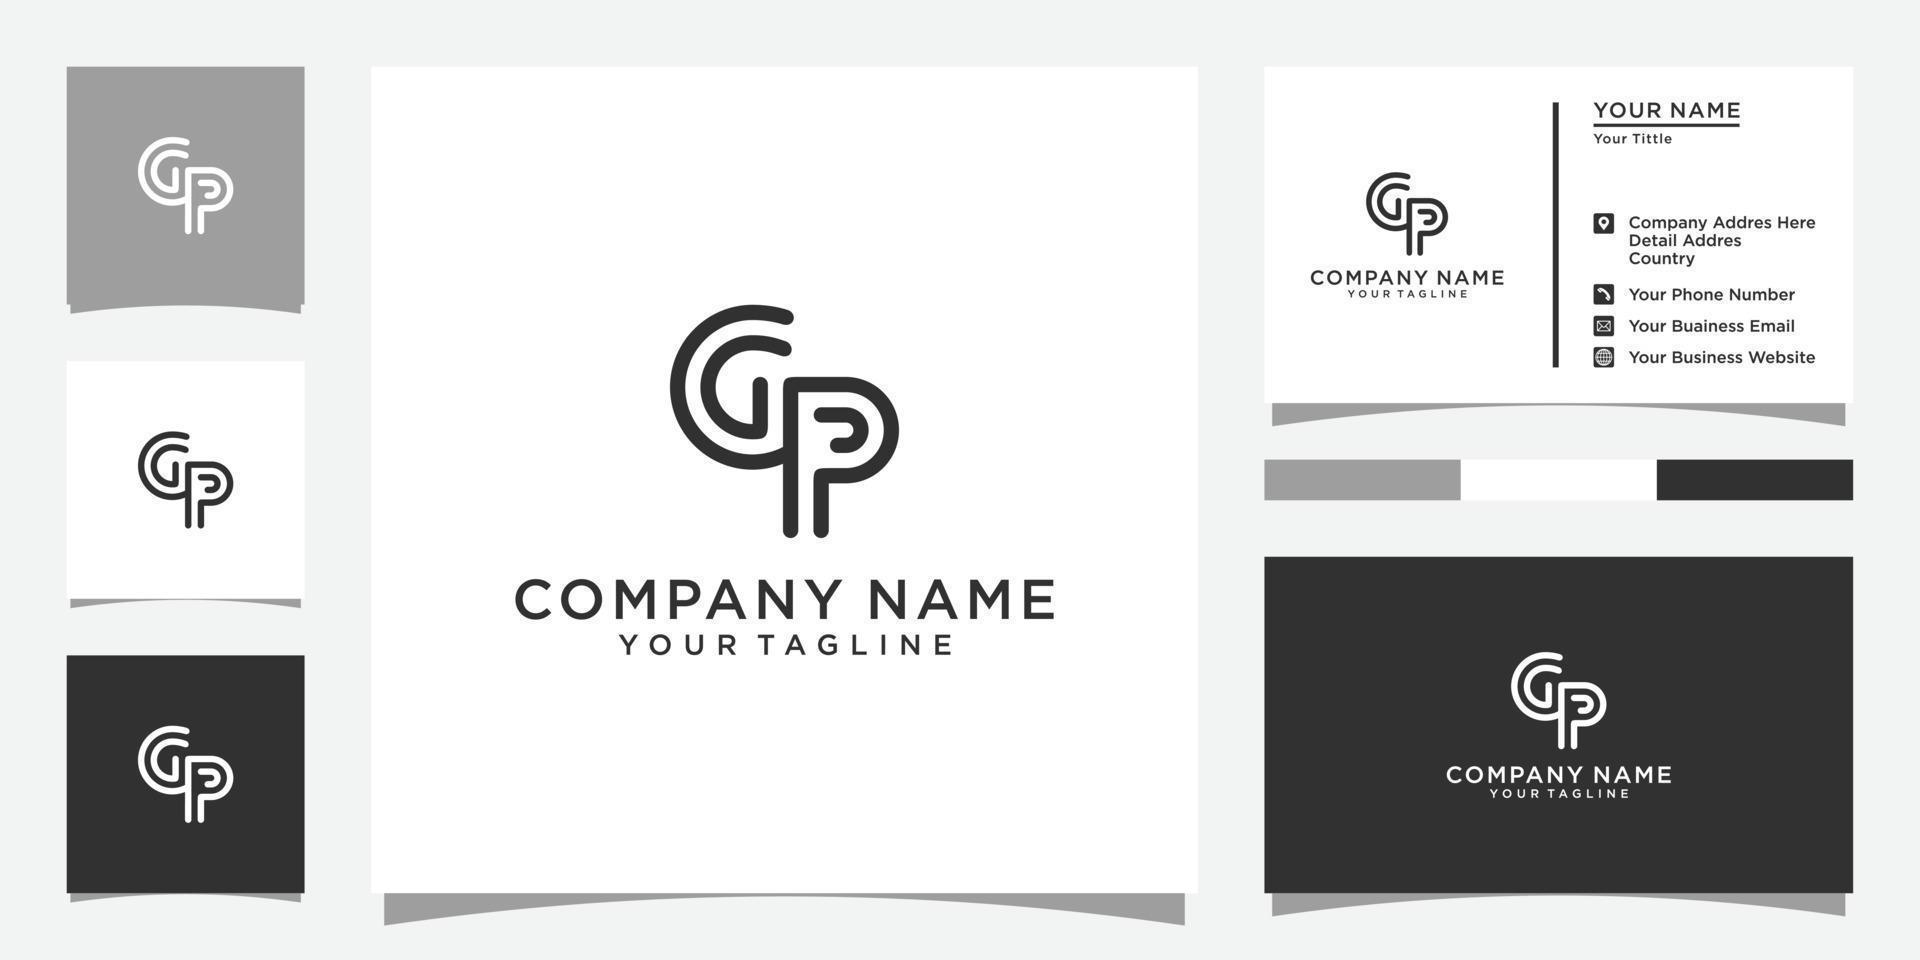 GP or PG initial letter logo design vector. vector